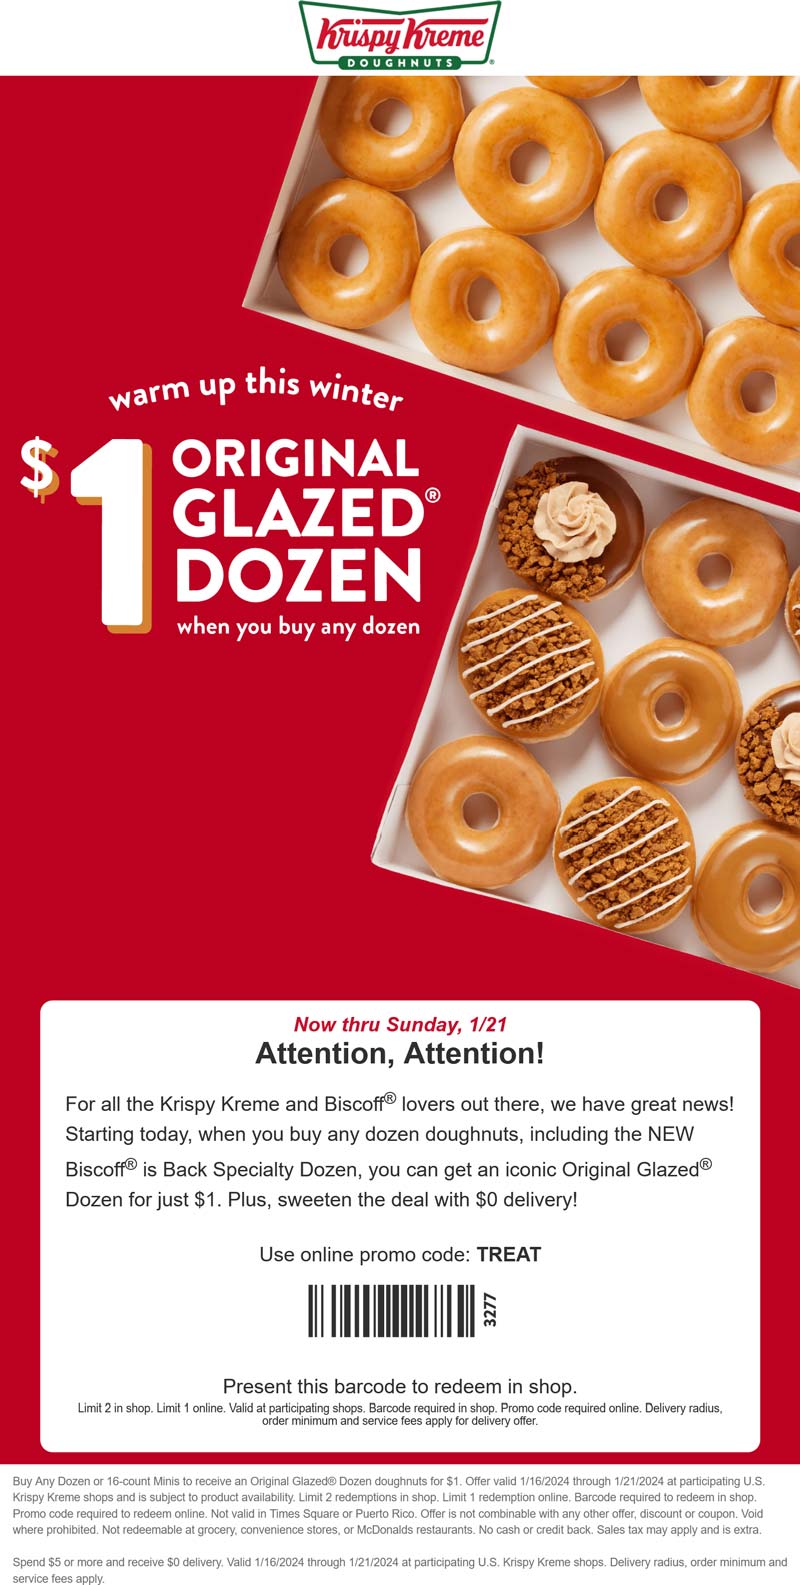 Krispy Kreme restaurants Coupon  Second dozen doughnuts for $1 + free delivery on $5 at Krispy Kreme, or online via promo code TREAT #krispykreme 